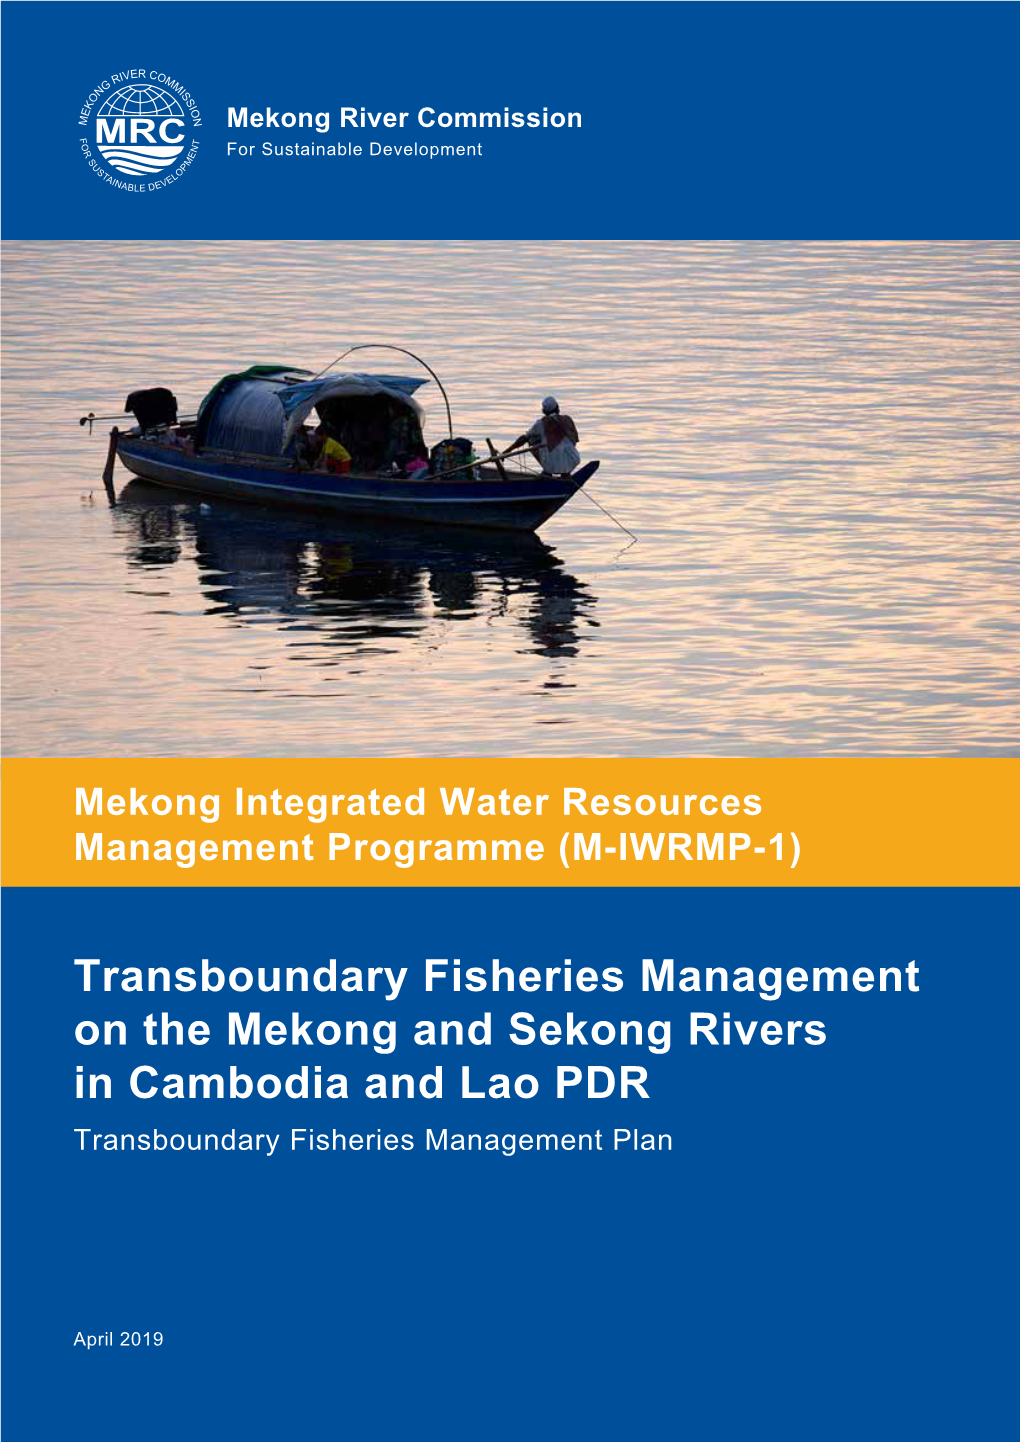 Transboundary Fisheries Management Plan